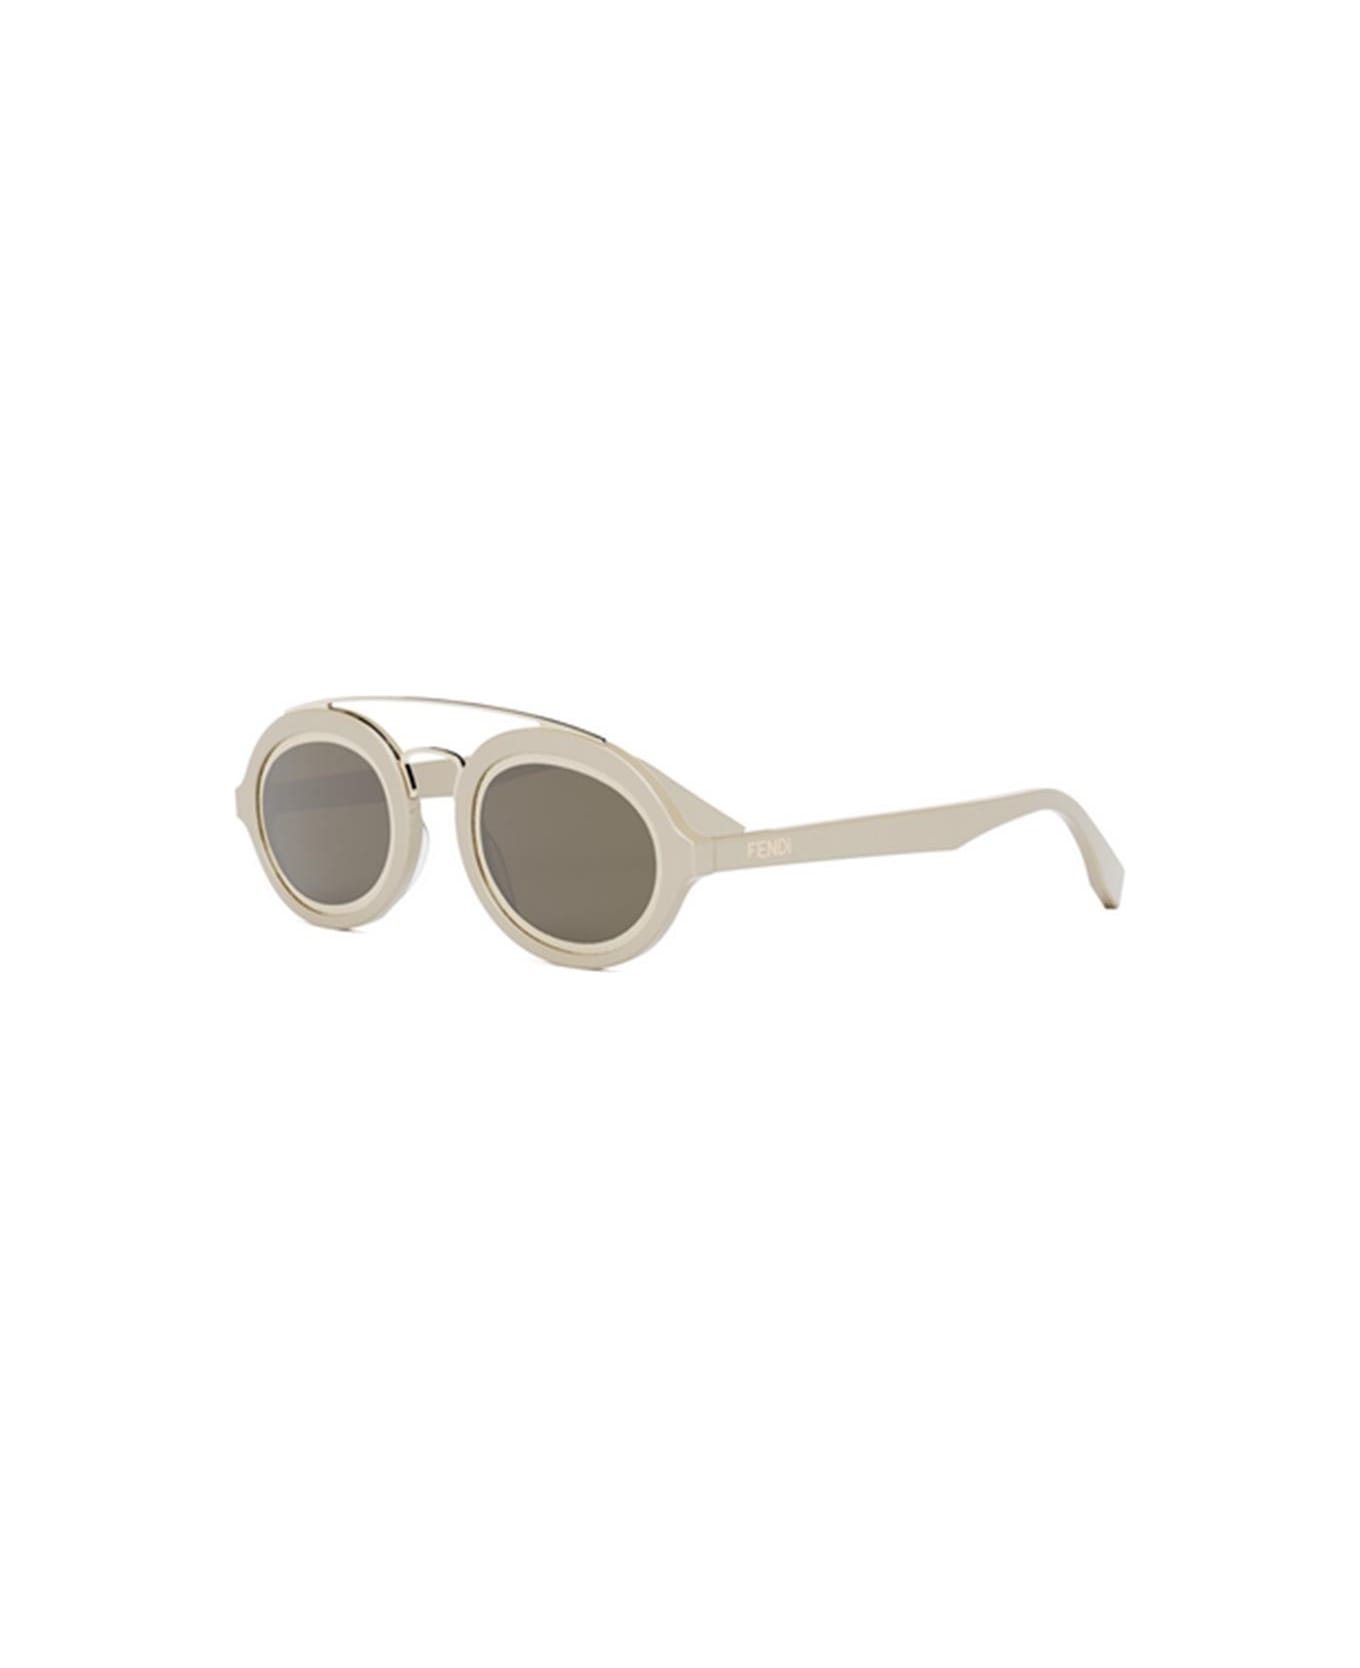 Fendi Eyewear Sunglasses Linda - Avorio/Marrone